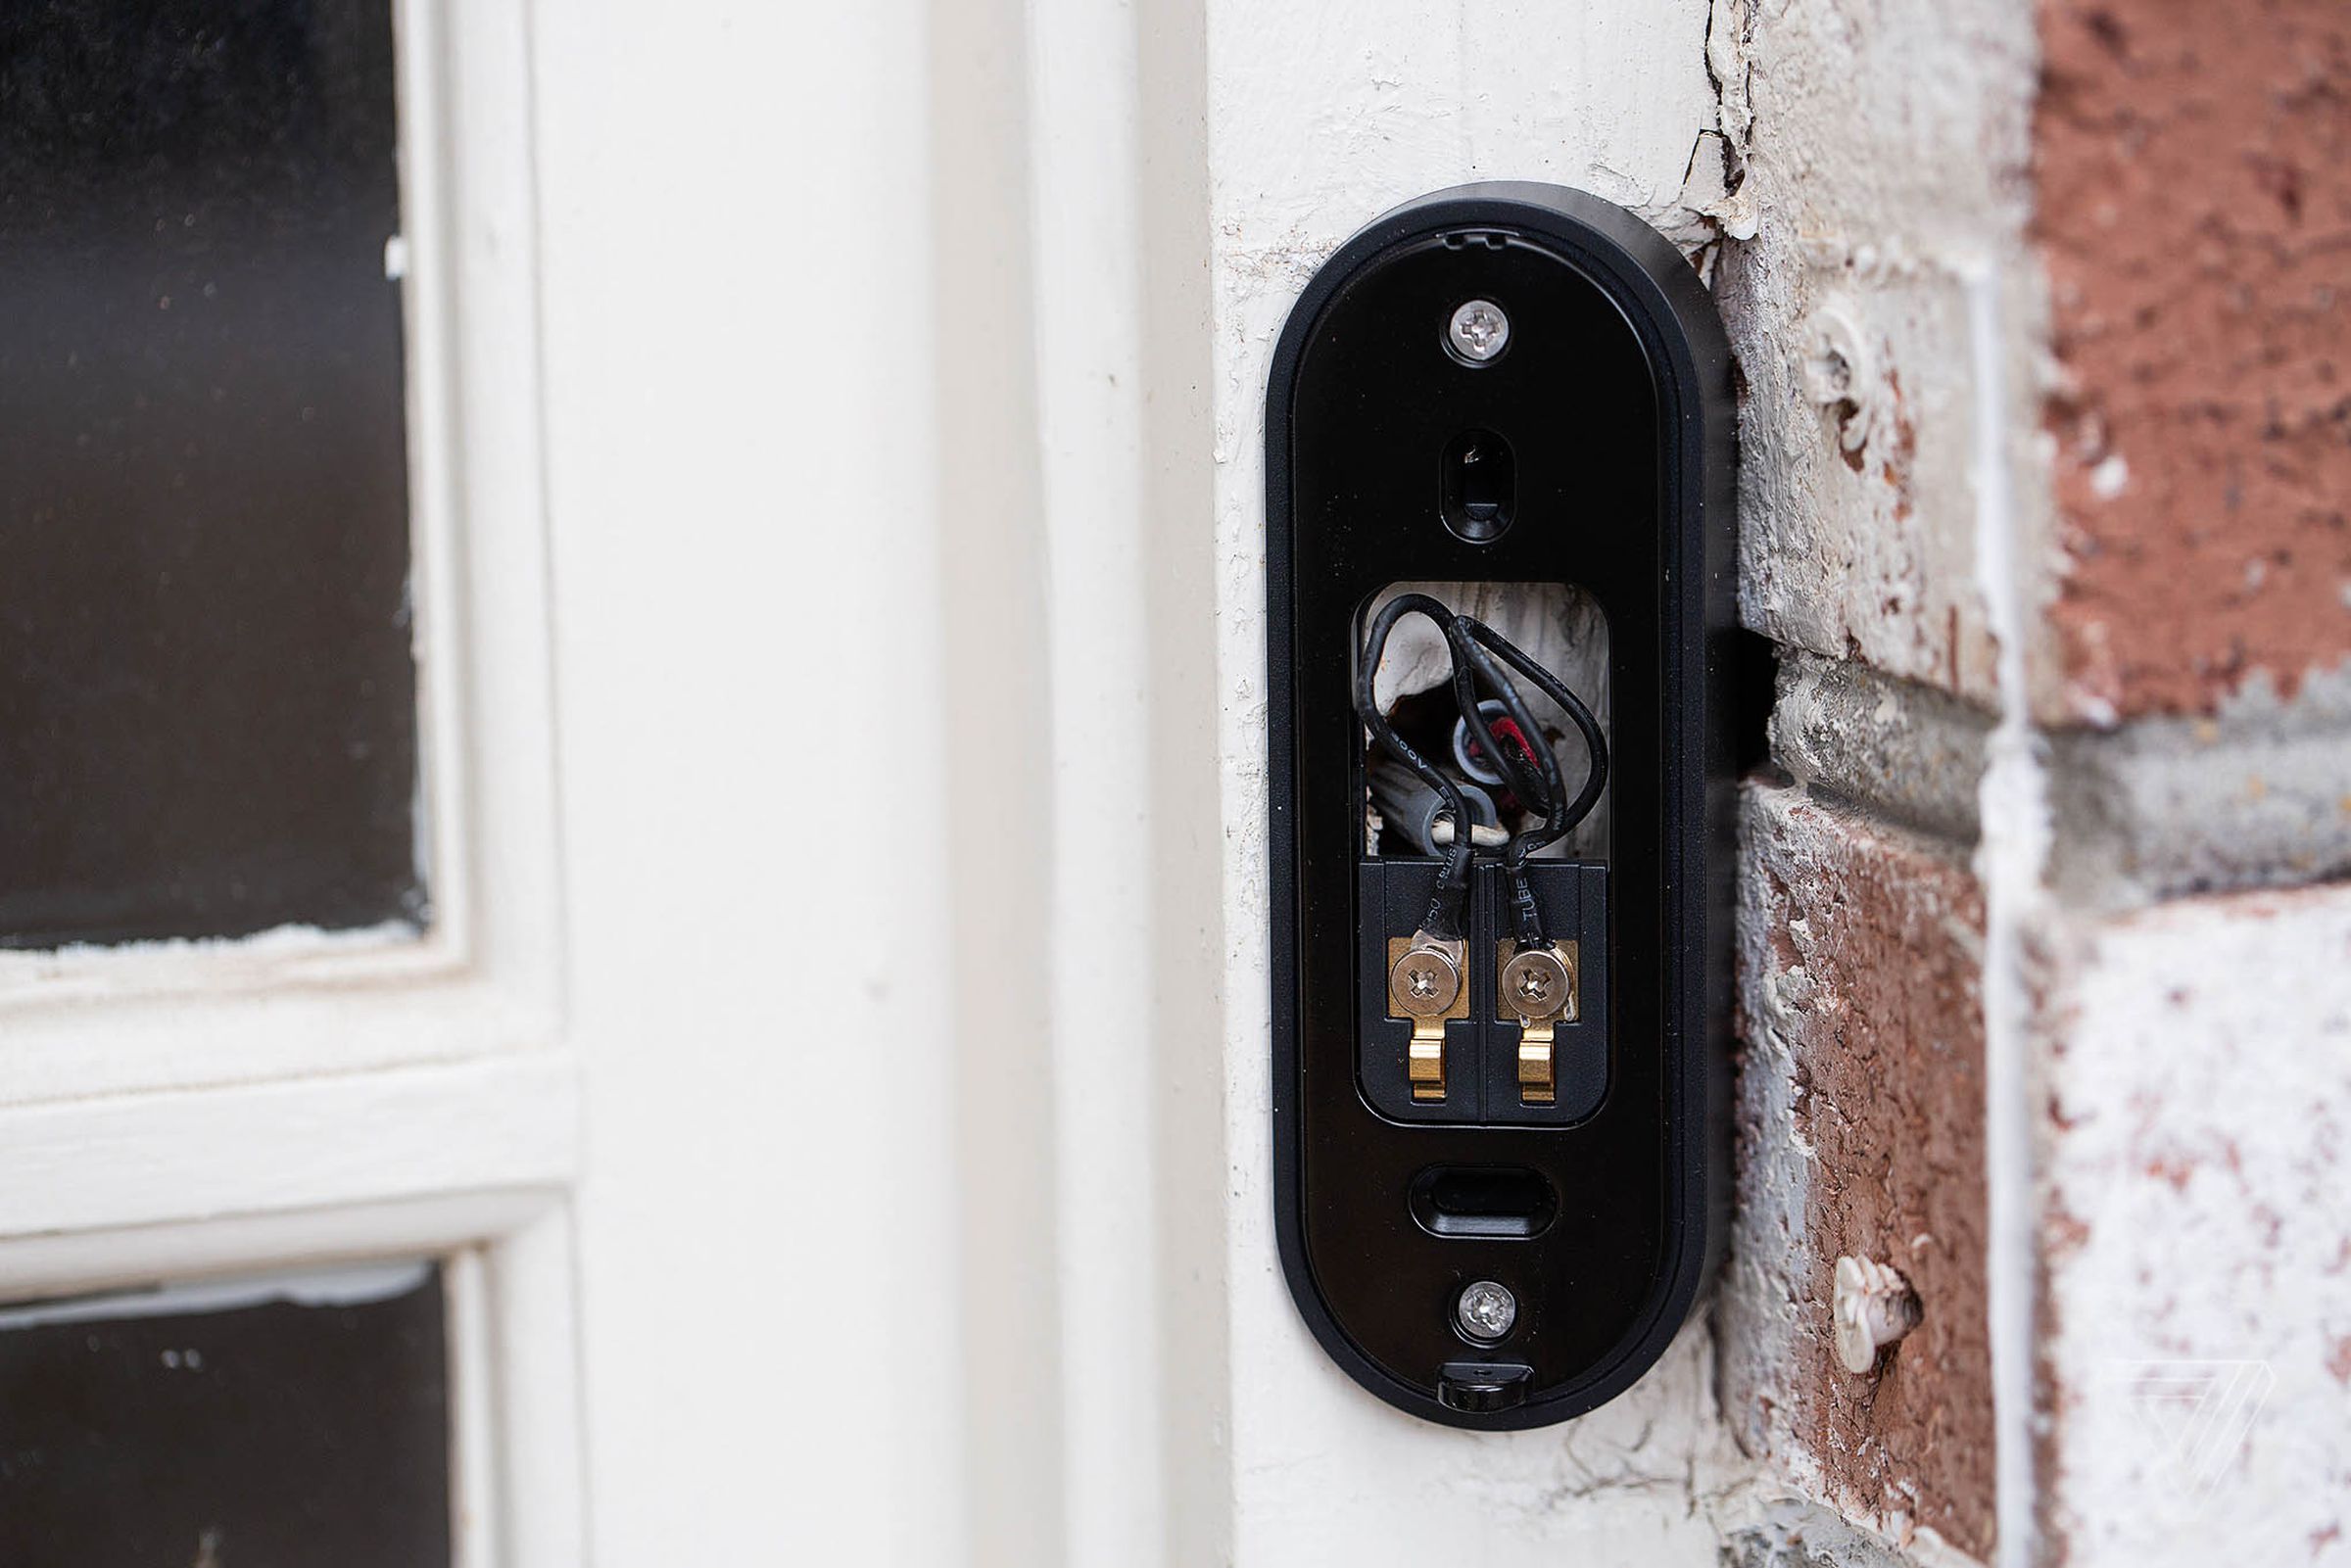 The Wemo’s mount wires to your doorbell wiring.